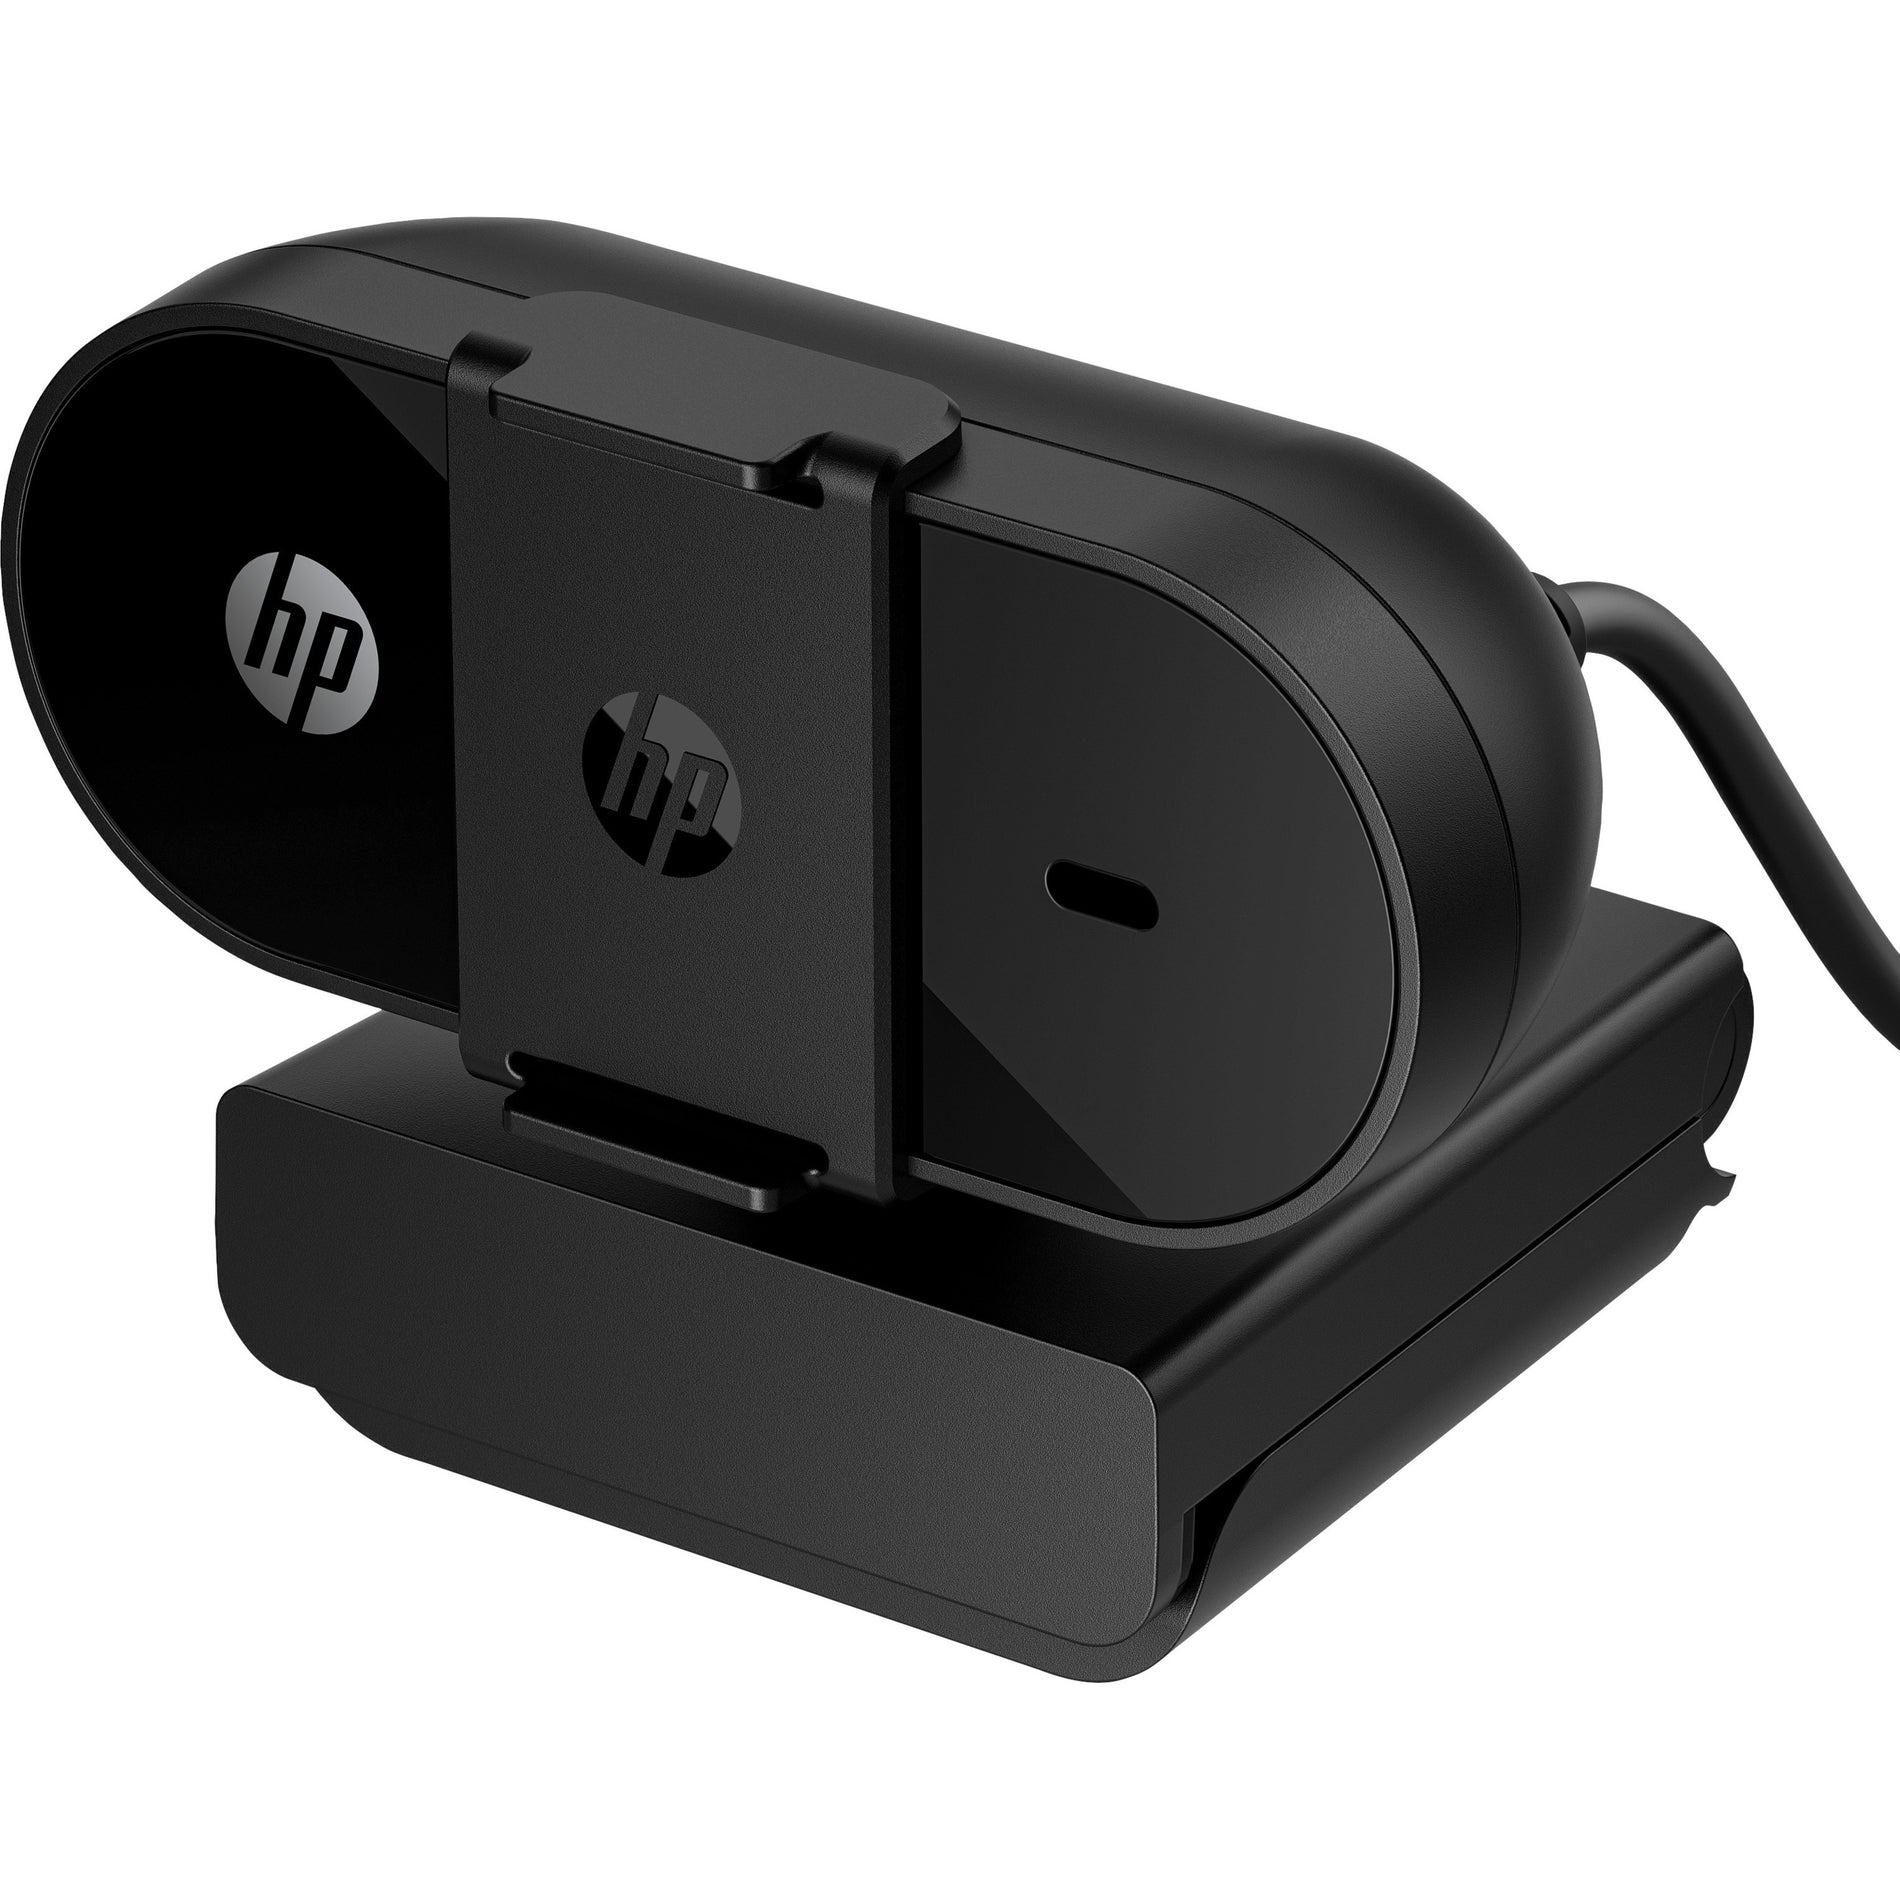 HP 53X26AA#ABL 320 FHD Webcam 30 fps Nero USB Tipo A